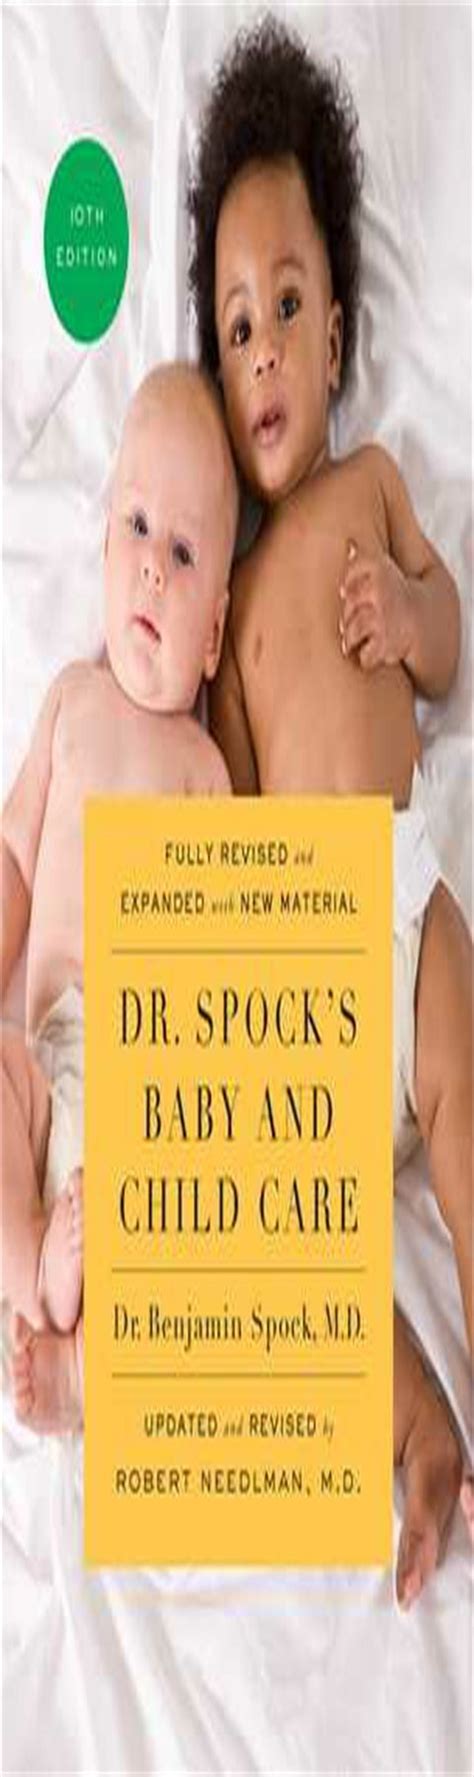 Rar Dr Spocks Baby And Child Care Downloa Stanwicksilvのブログ